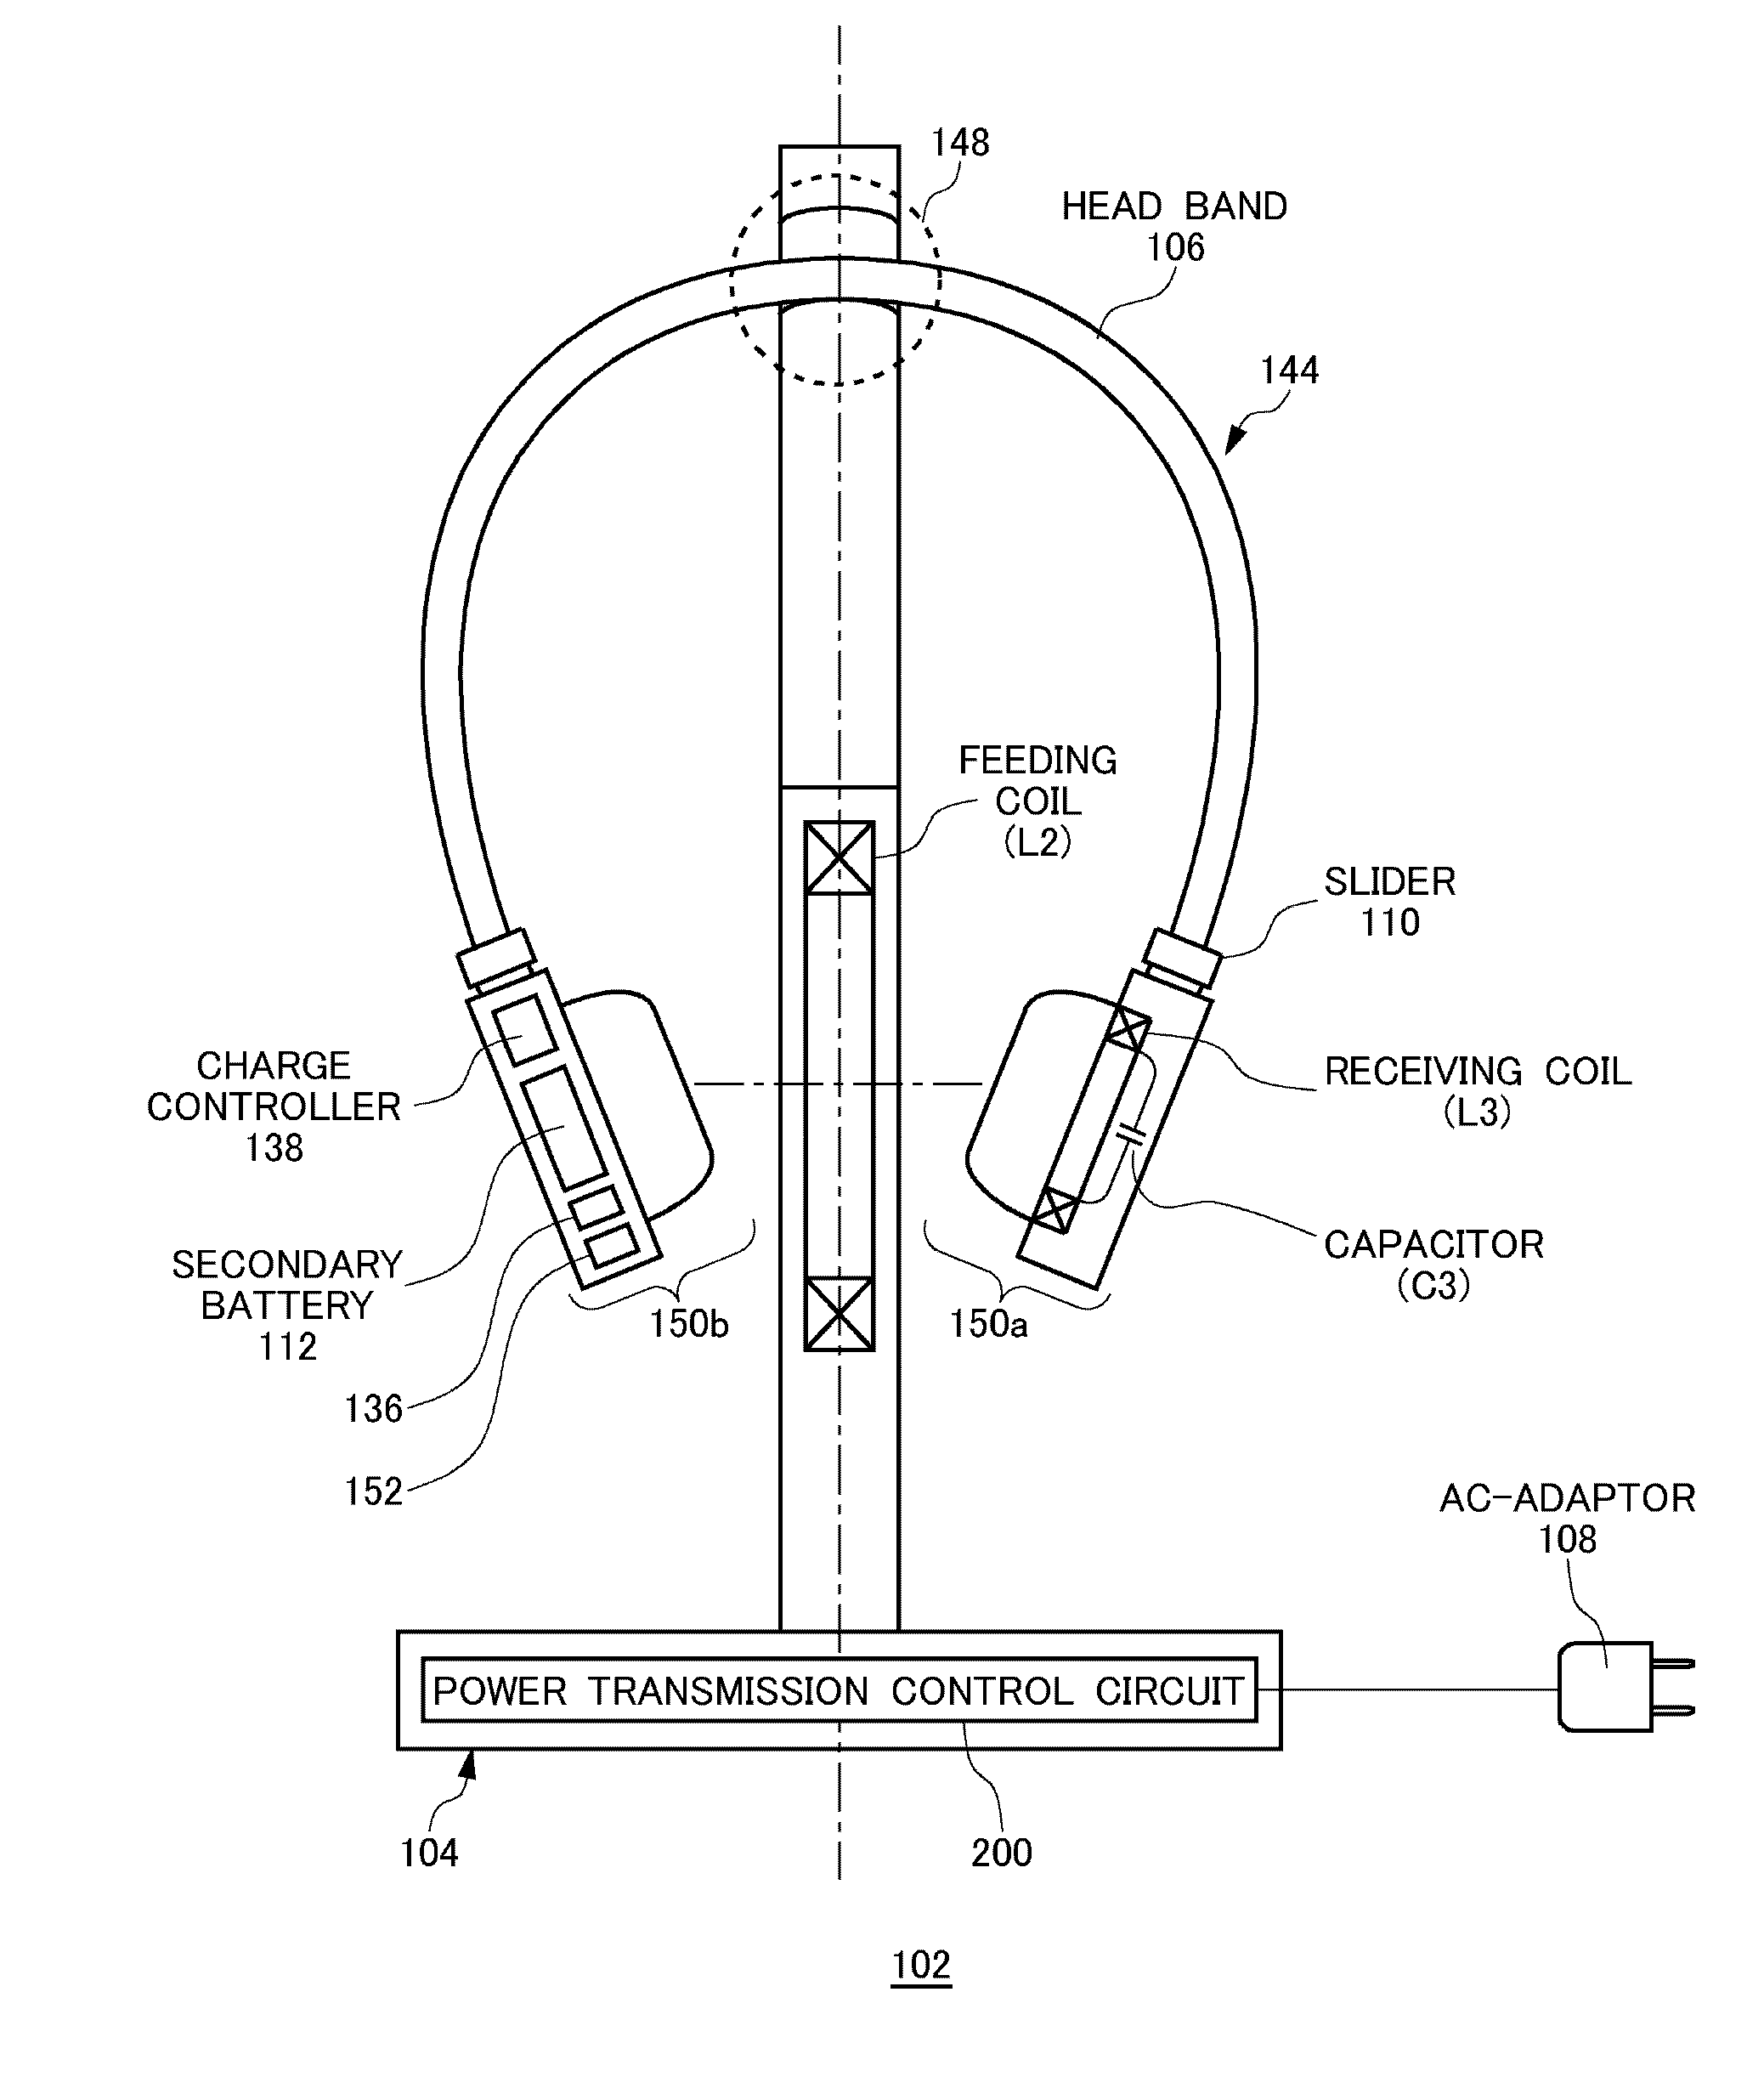 Headphone, headphone stand and headphone system